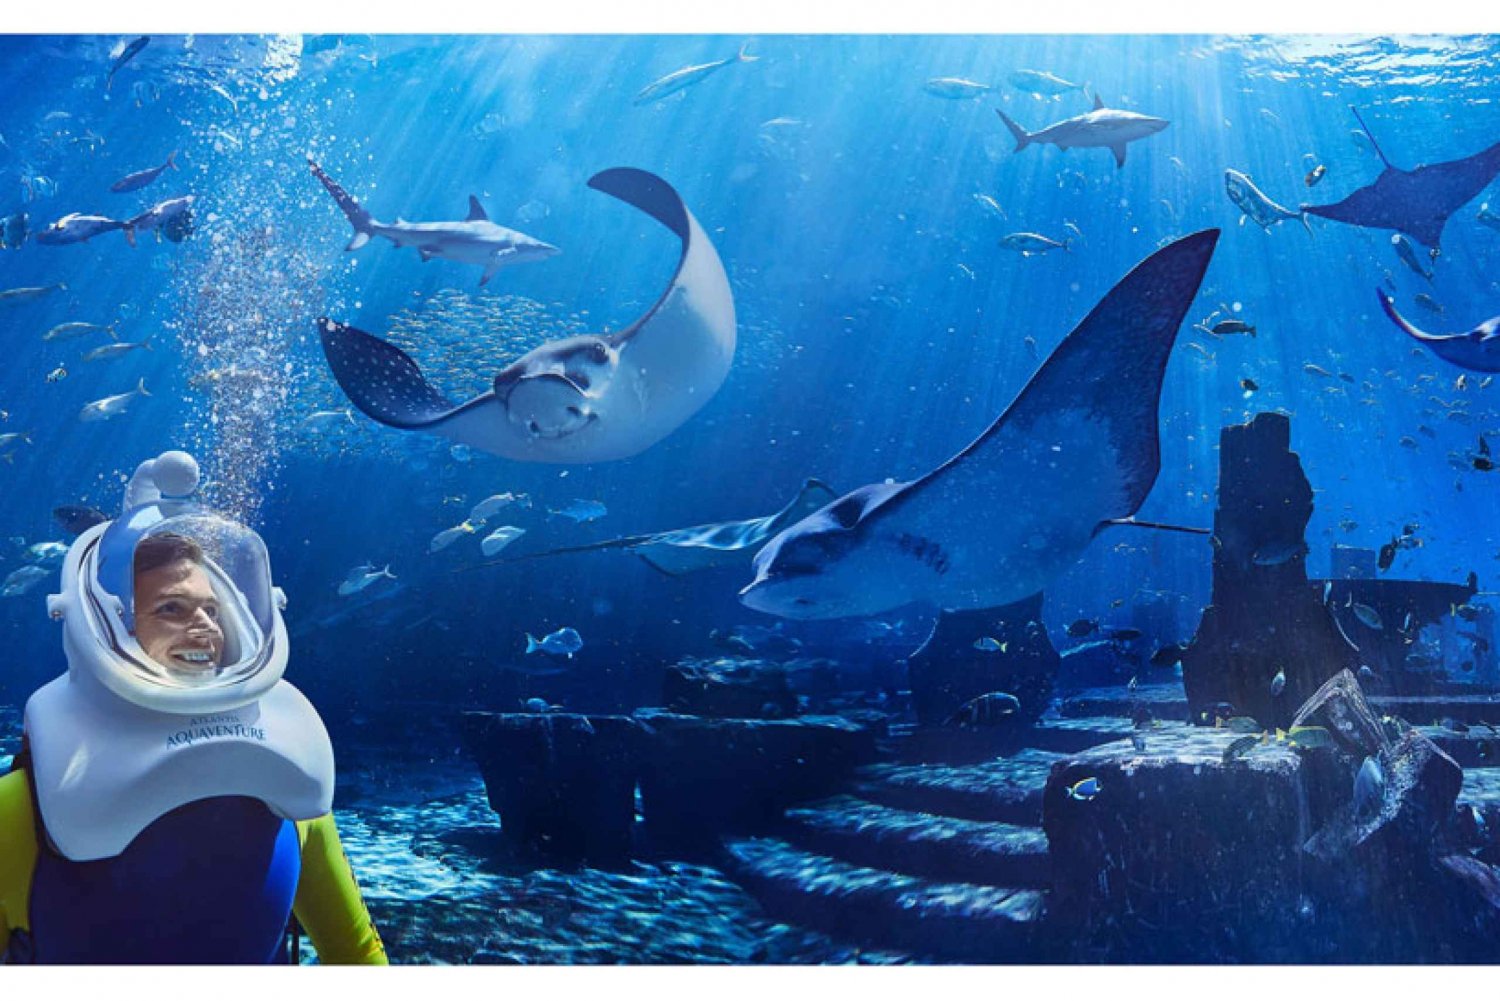 Dubai: The Lost Chambers Aquarium Atlantis Aqua Trek